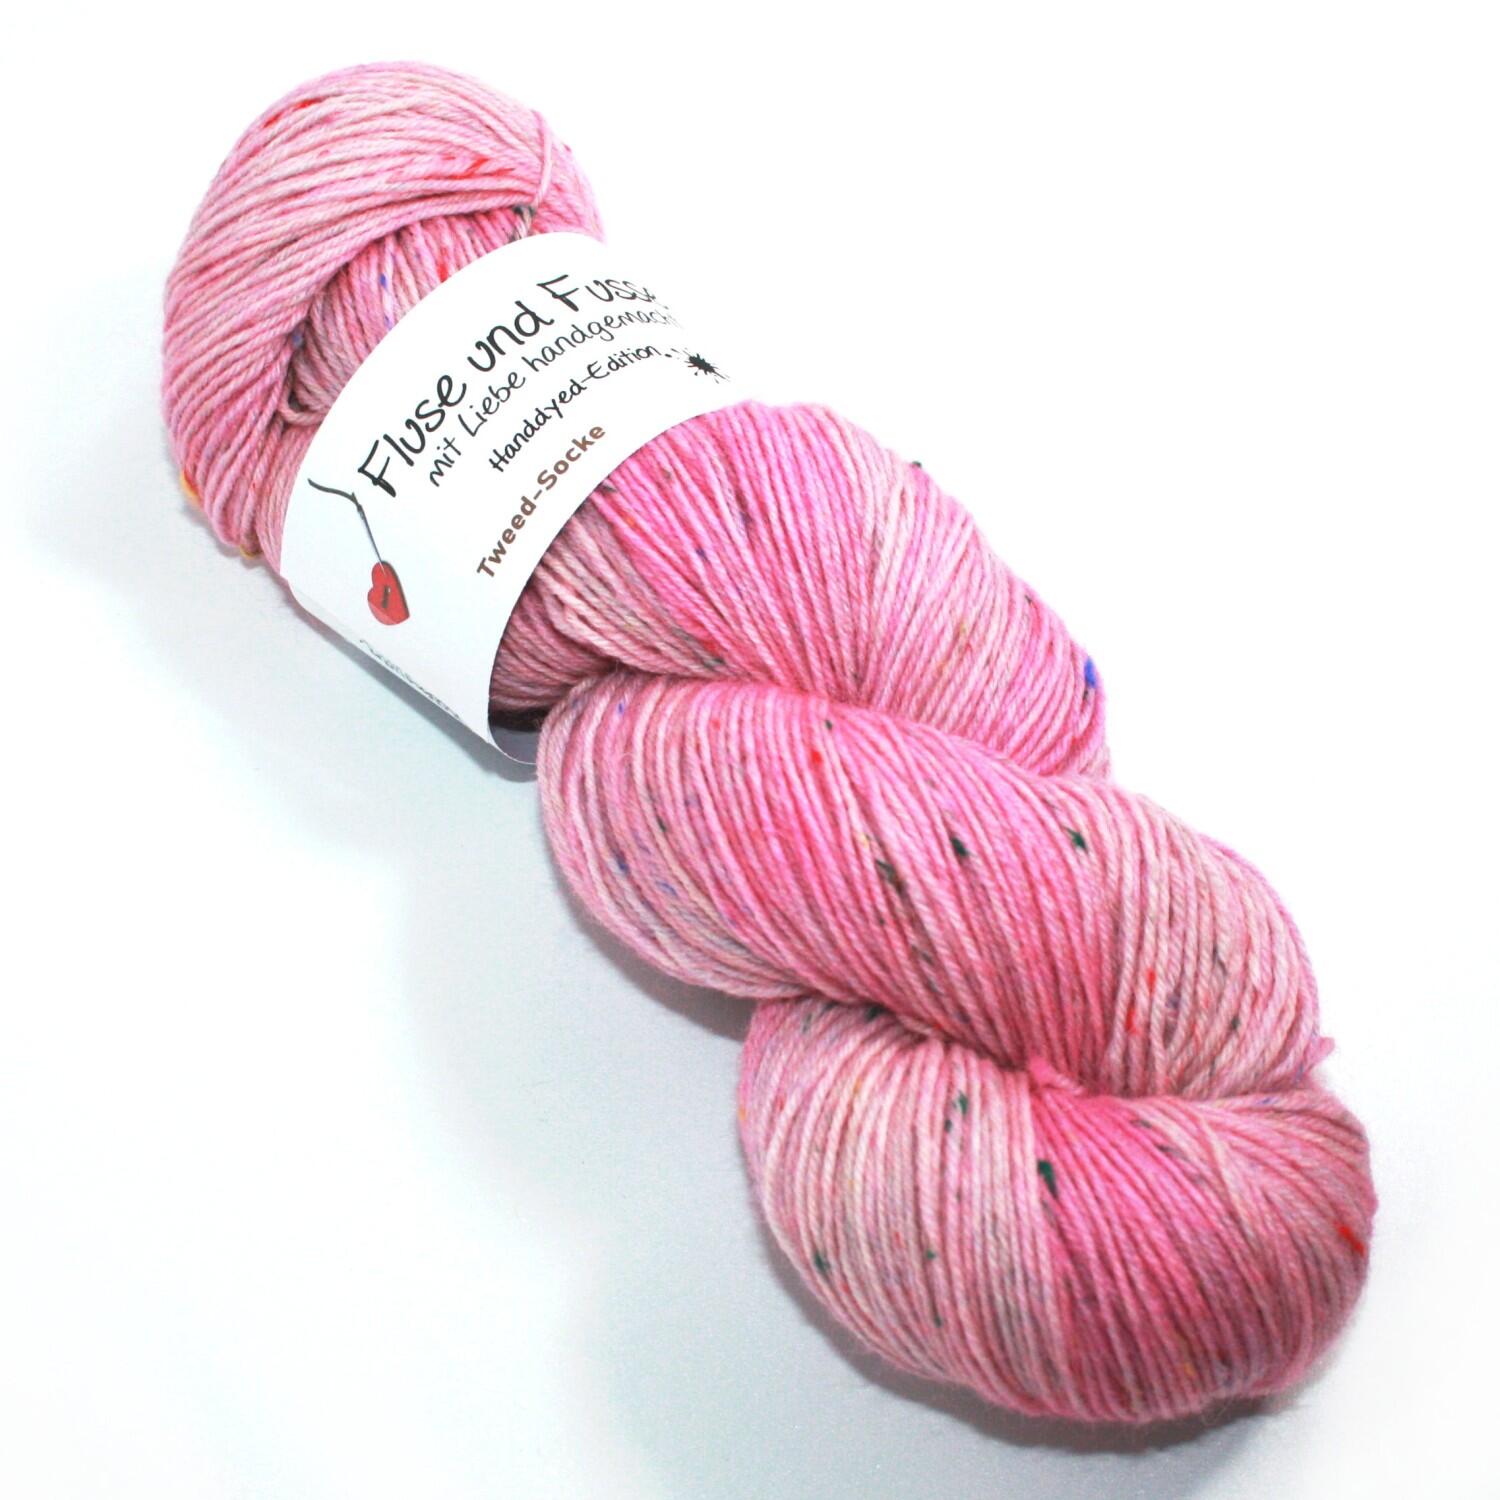 FuF Handdyed-Edition - Tweed Sockenwolle 100g Farbe: Rosenquarz